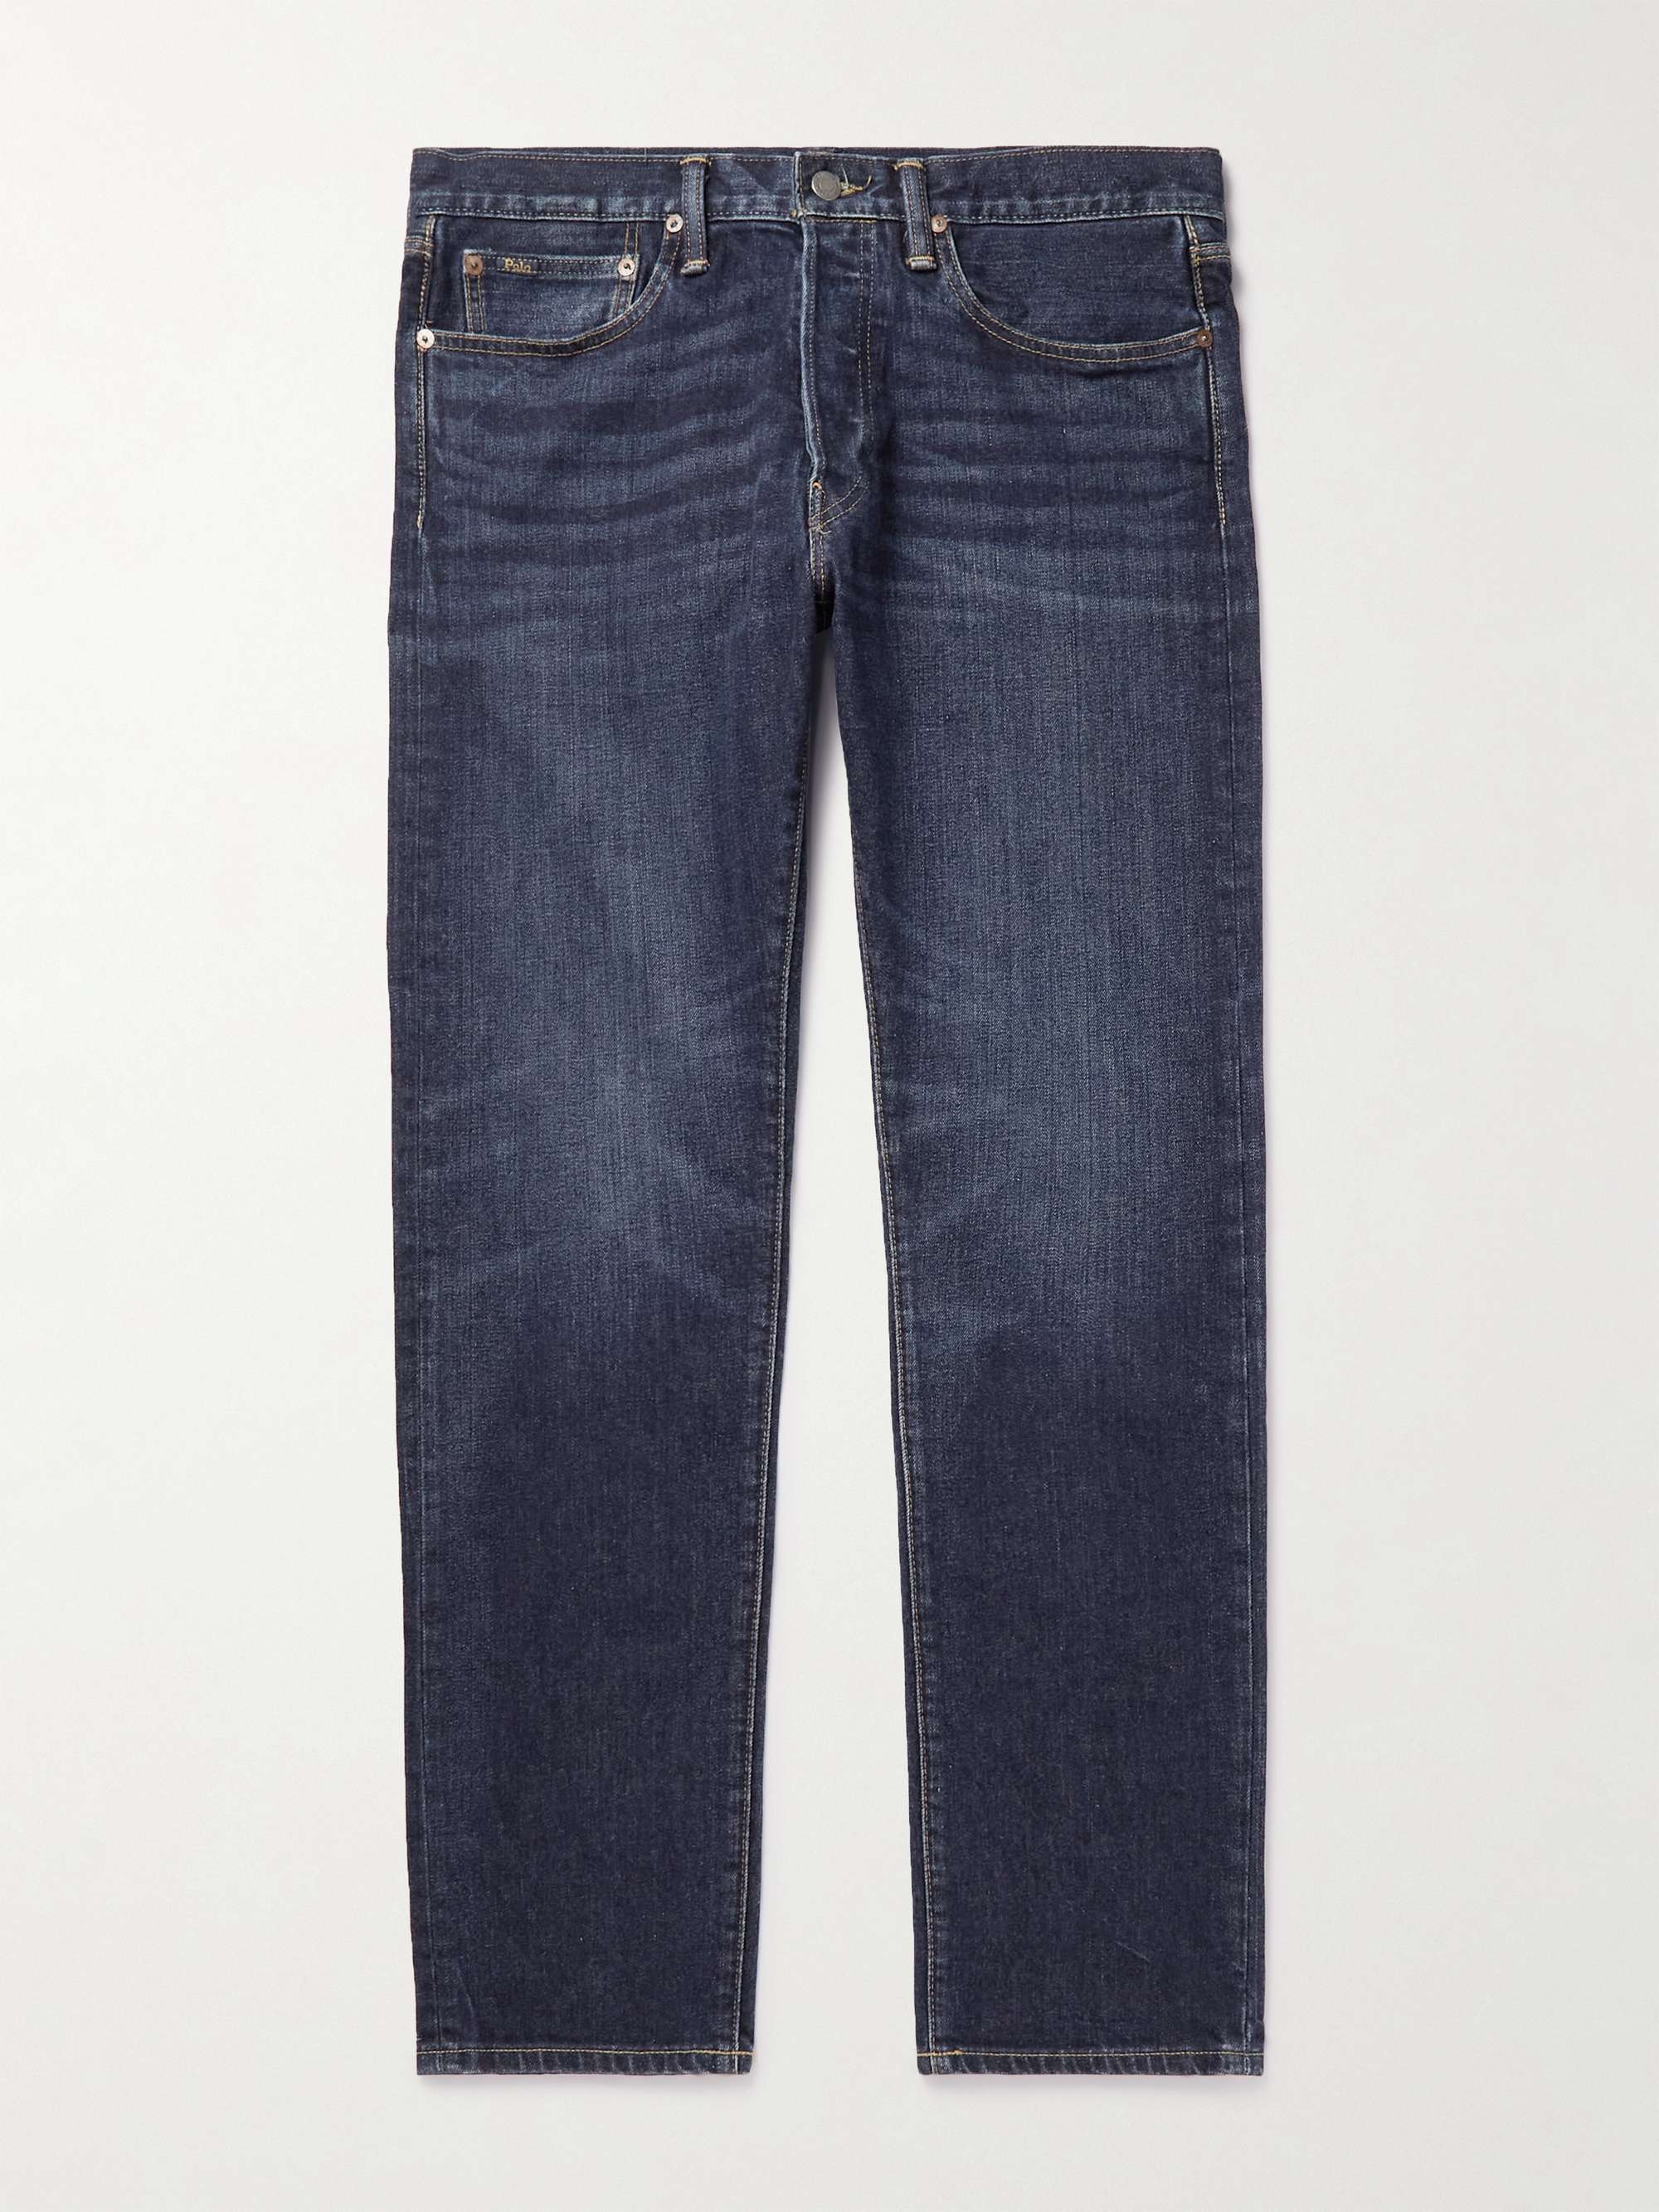 POLO RALPH LAUREN Sullivan Slim-Fit Jeans for Men